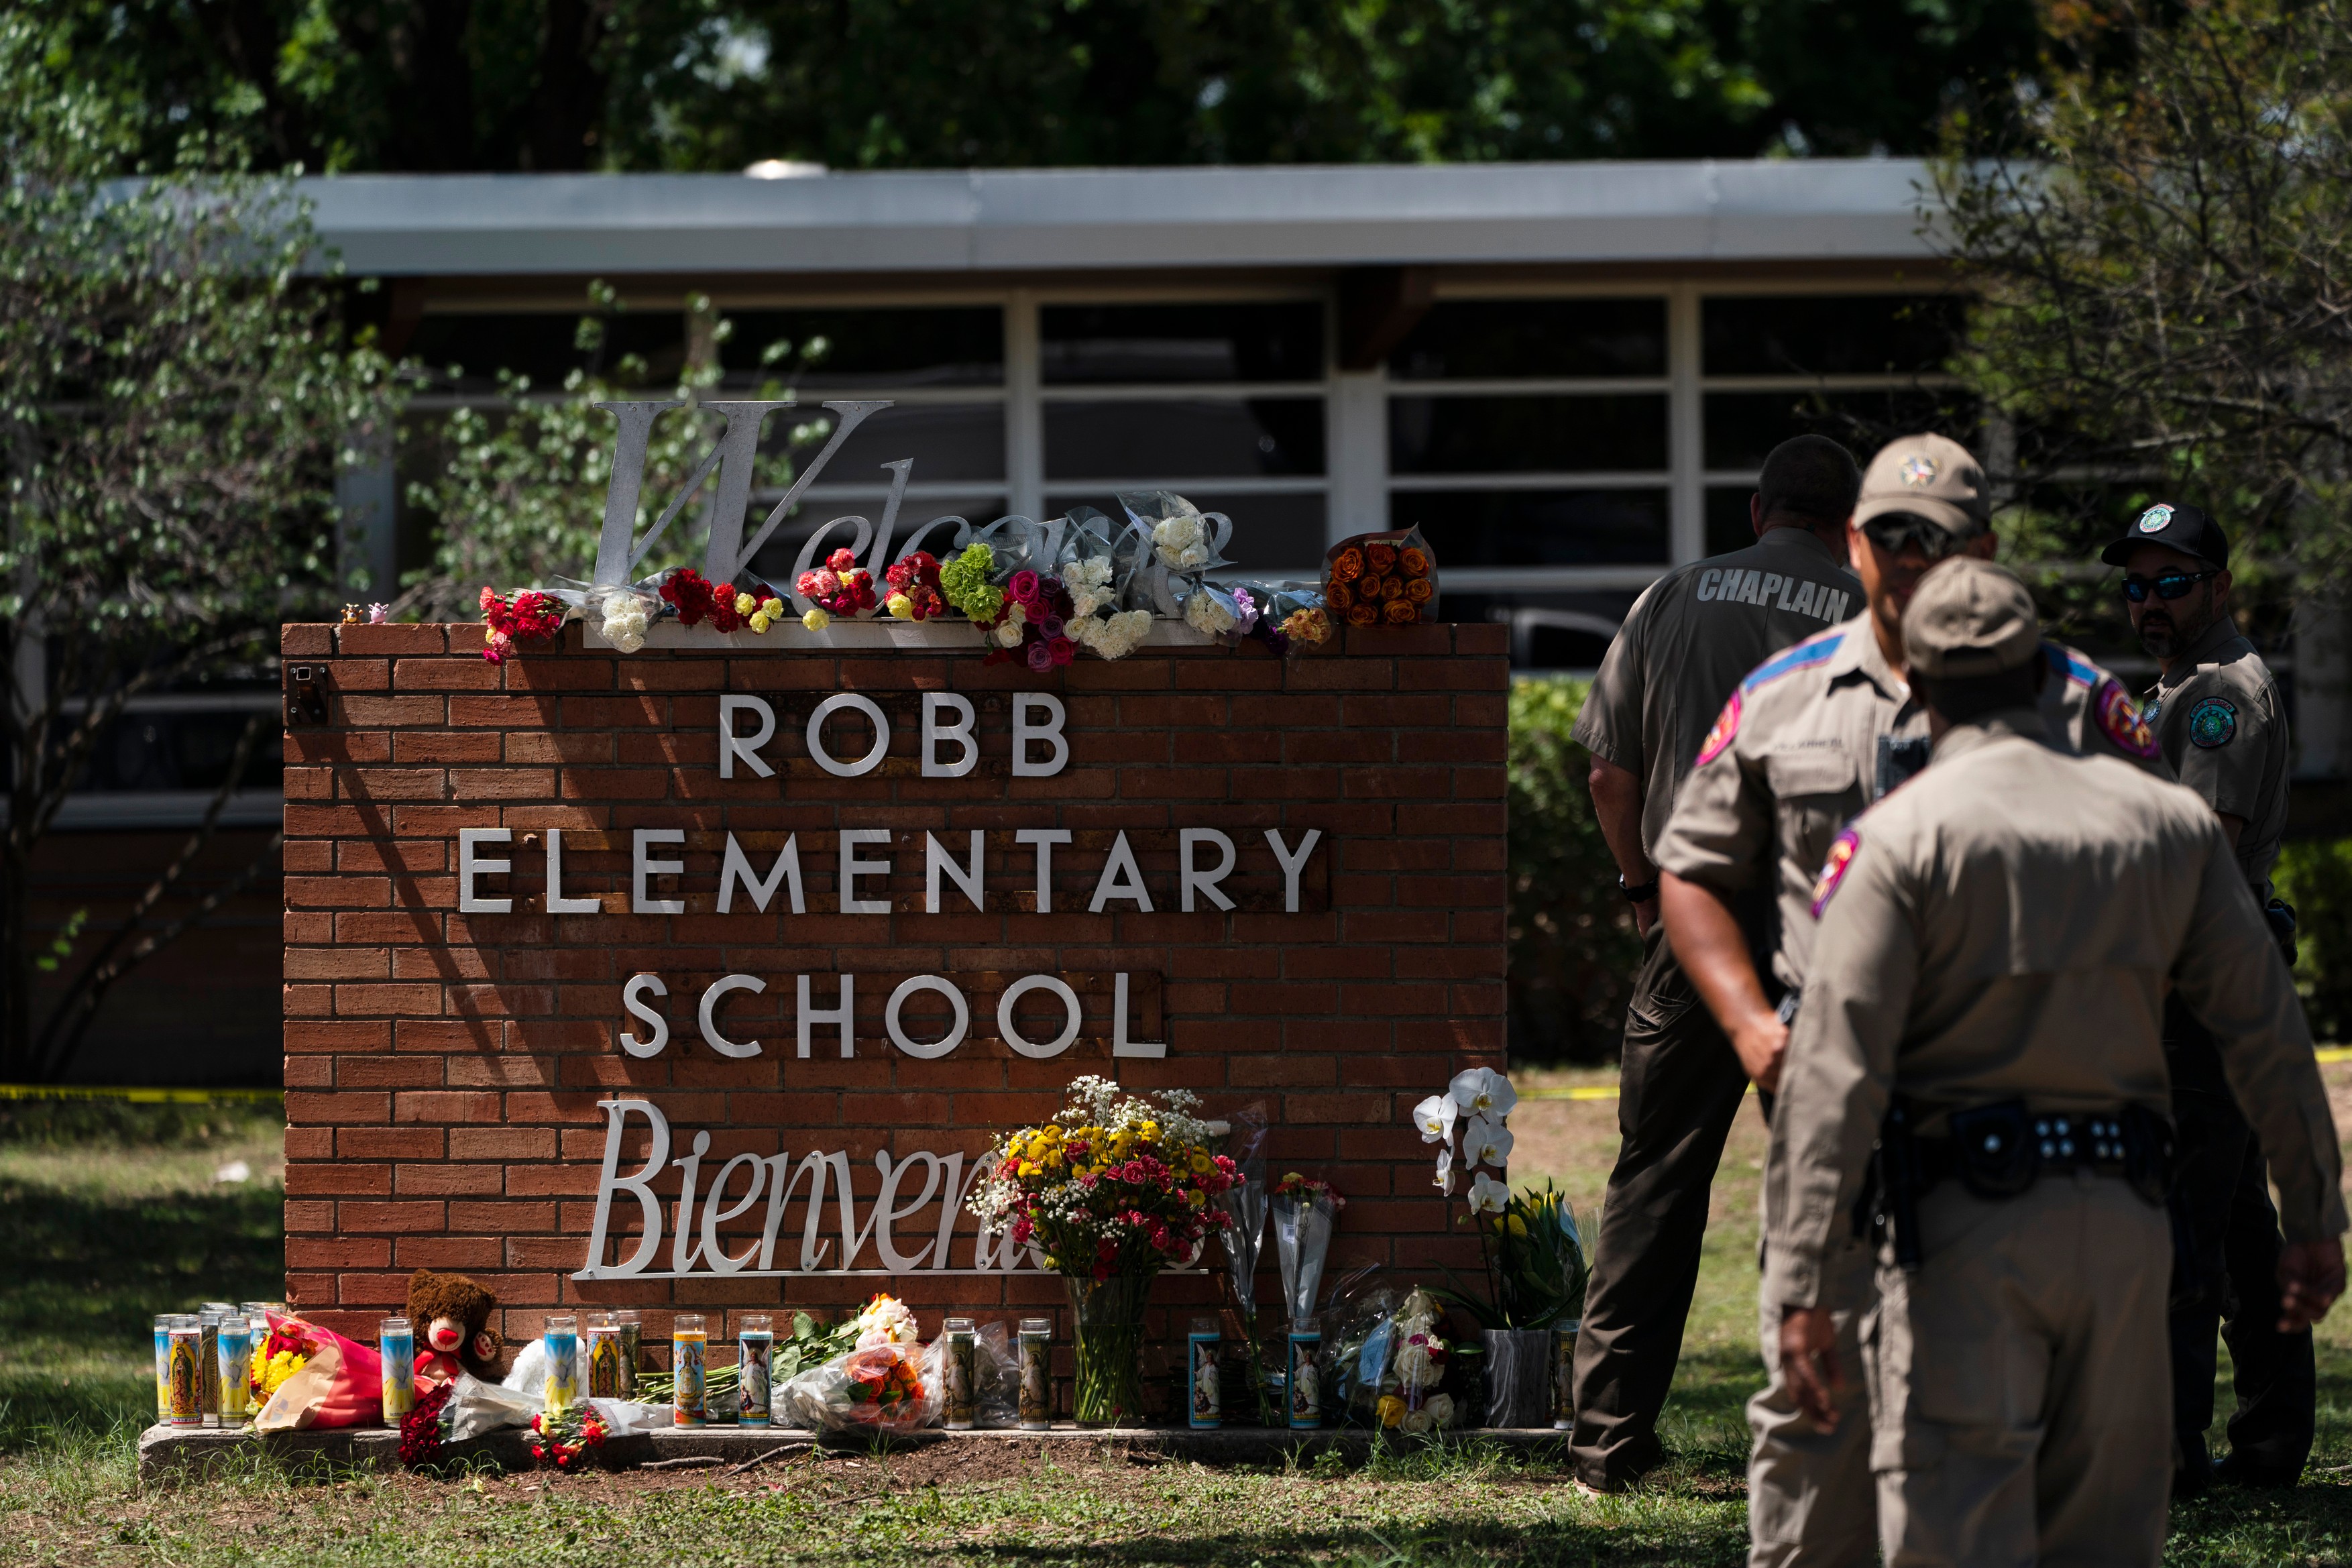 Atacatorul din Texas anuntase pe Facebook ca va ataca o scoala primara